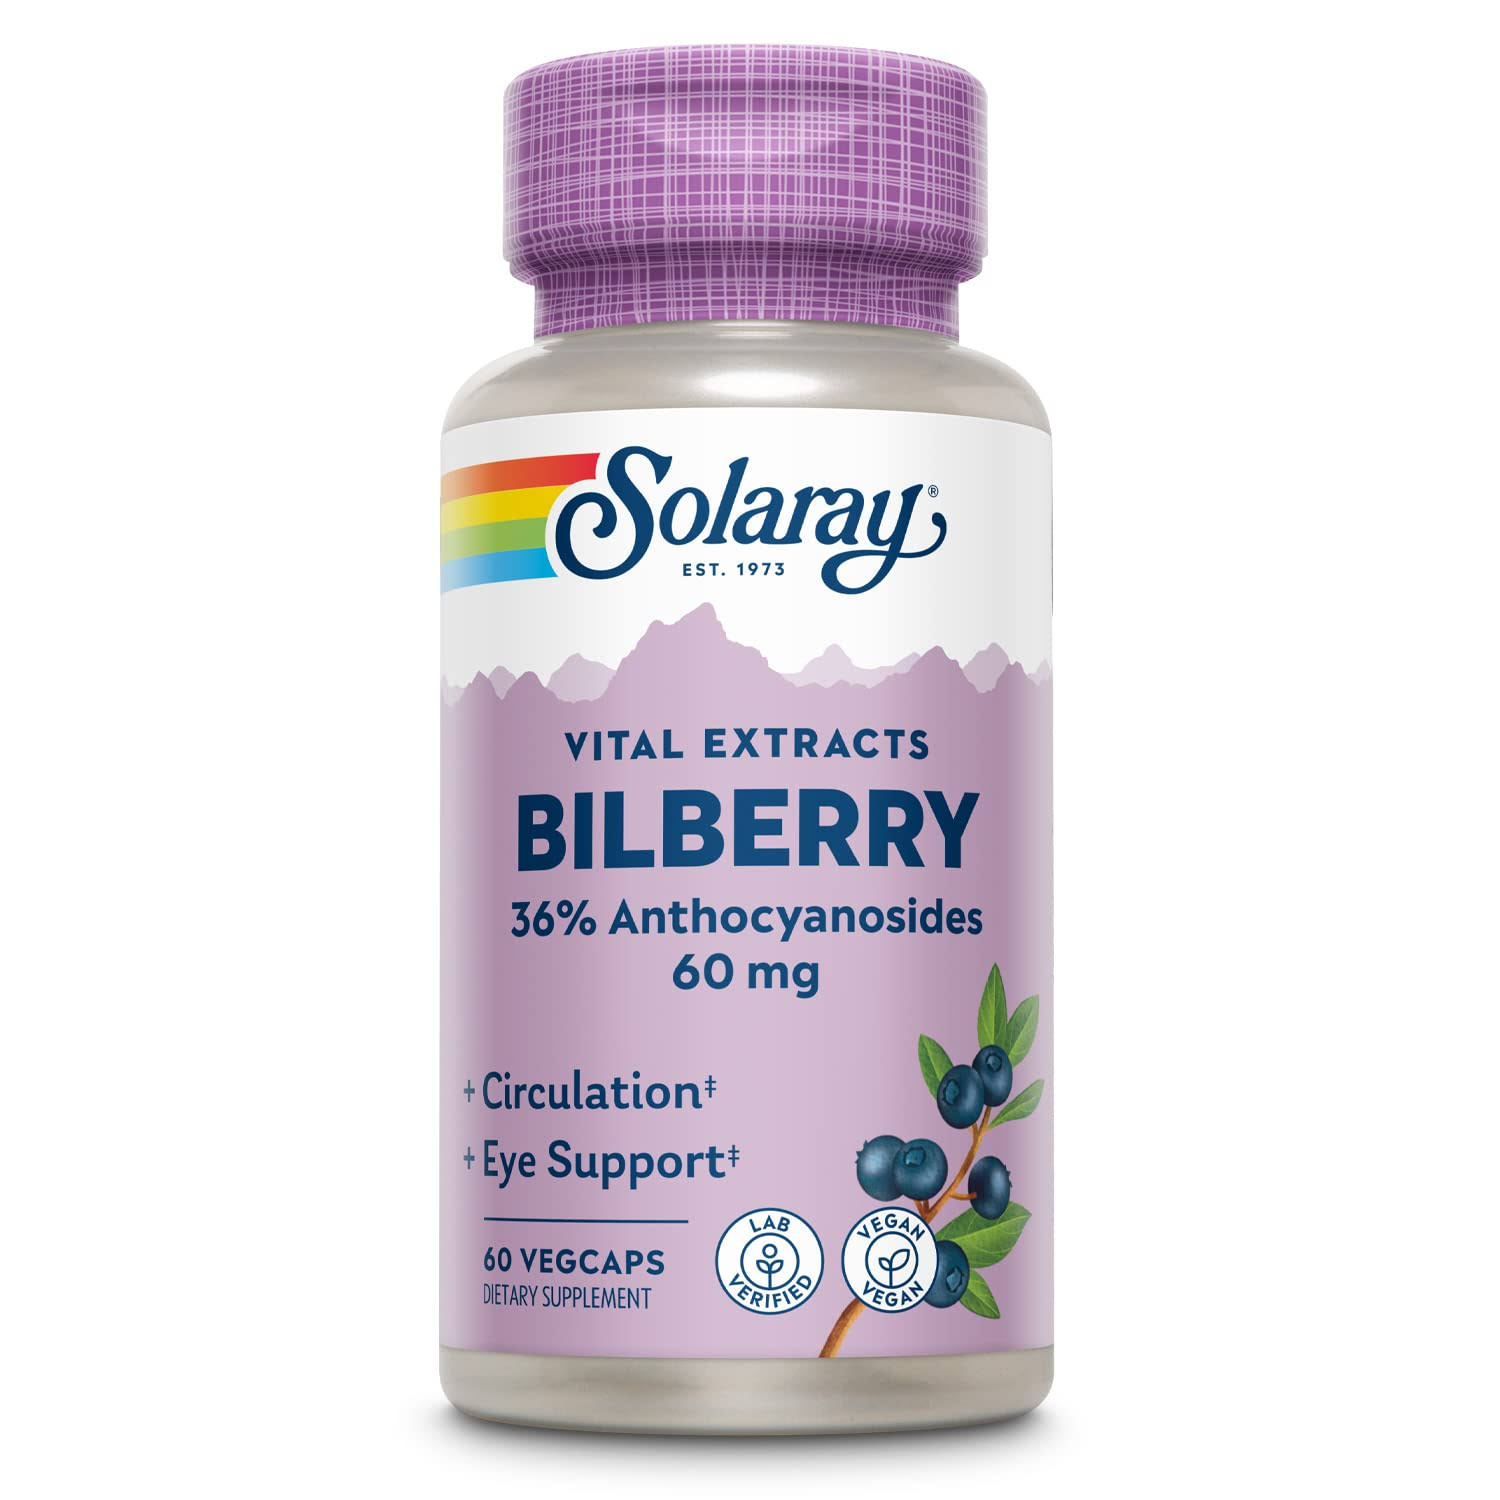 Solaray Bilberry Extract Supplement - 60 Vegetarian Capsules